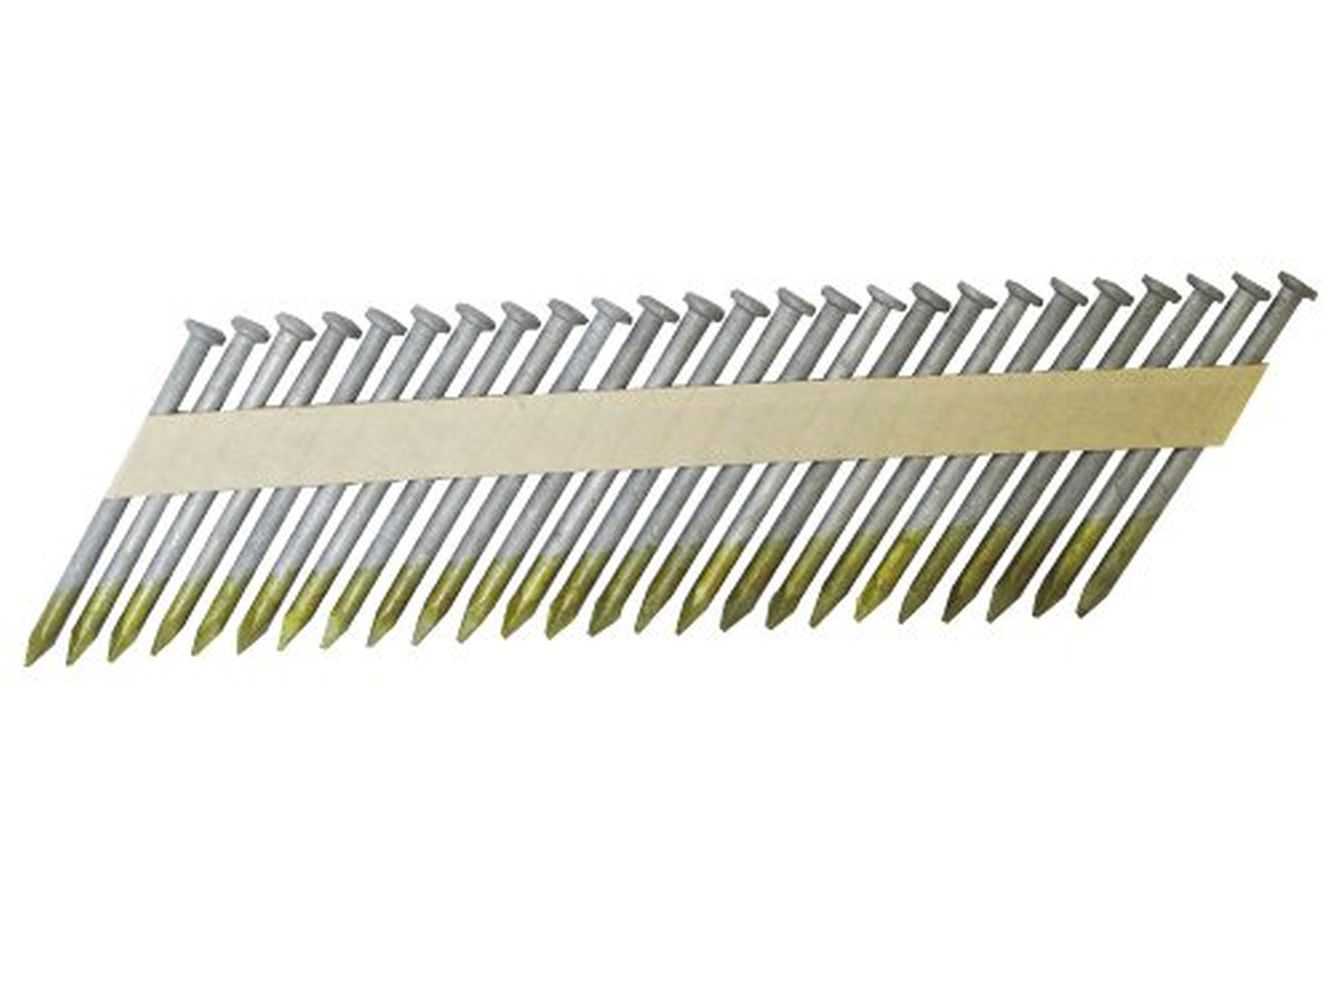 Pneu-Tools 922435 2-1/2'x0.162 HD Galv Joist Hanger Nails-for 33deg nailer-1,200